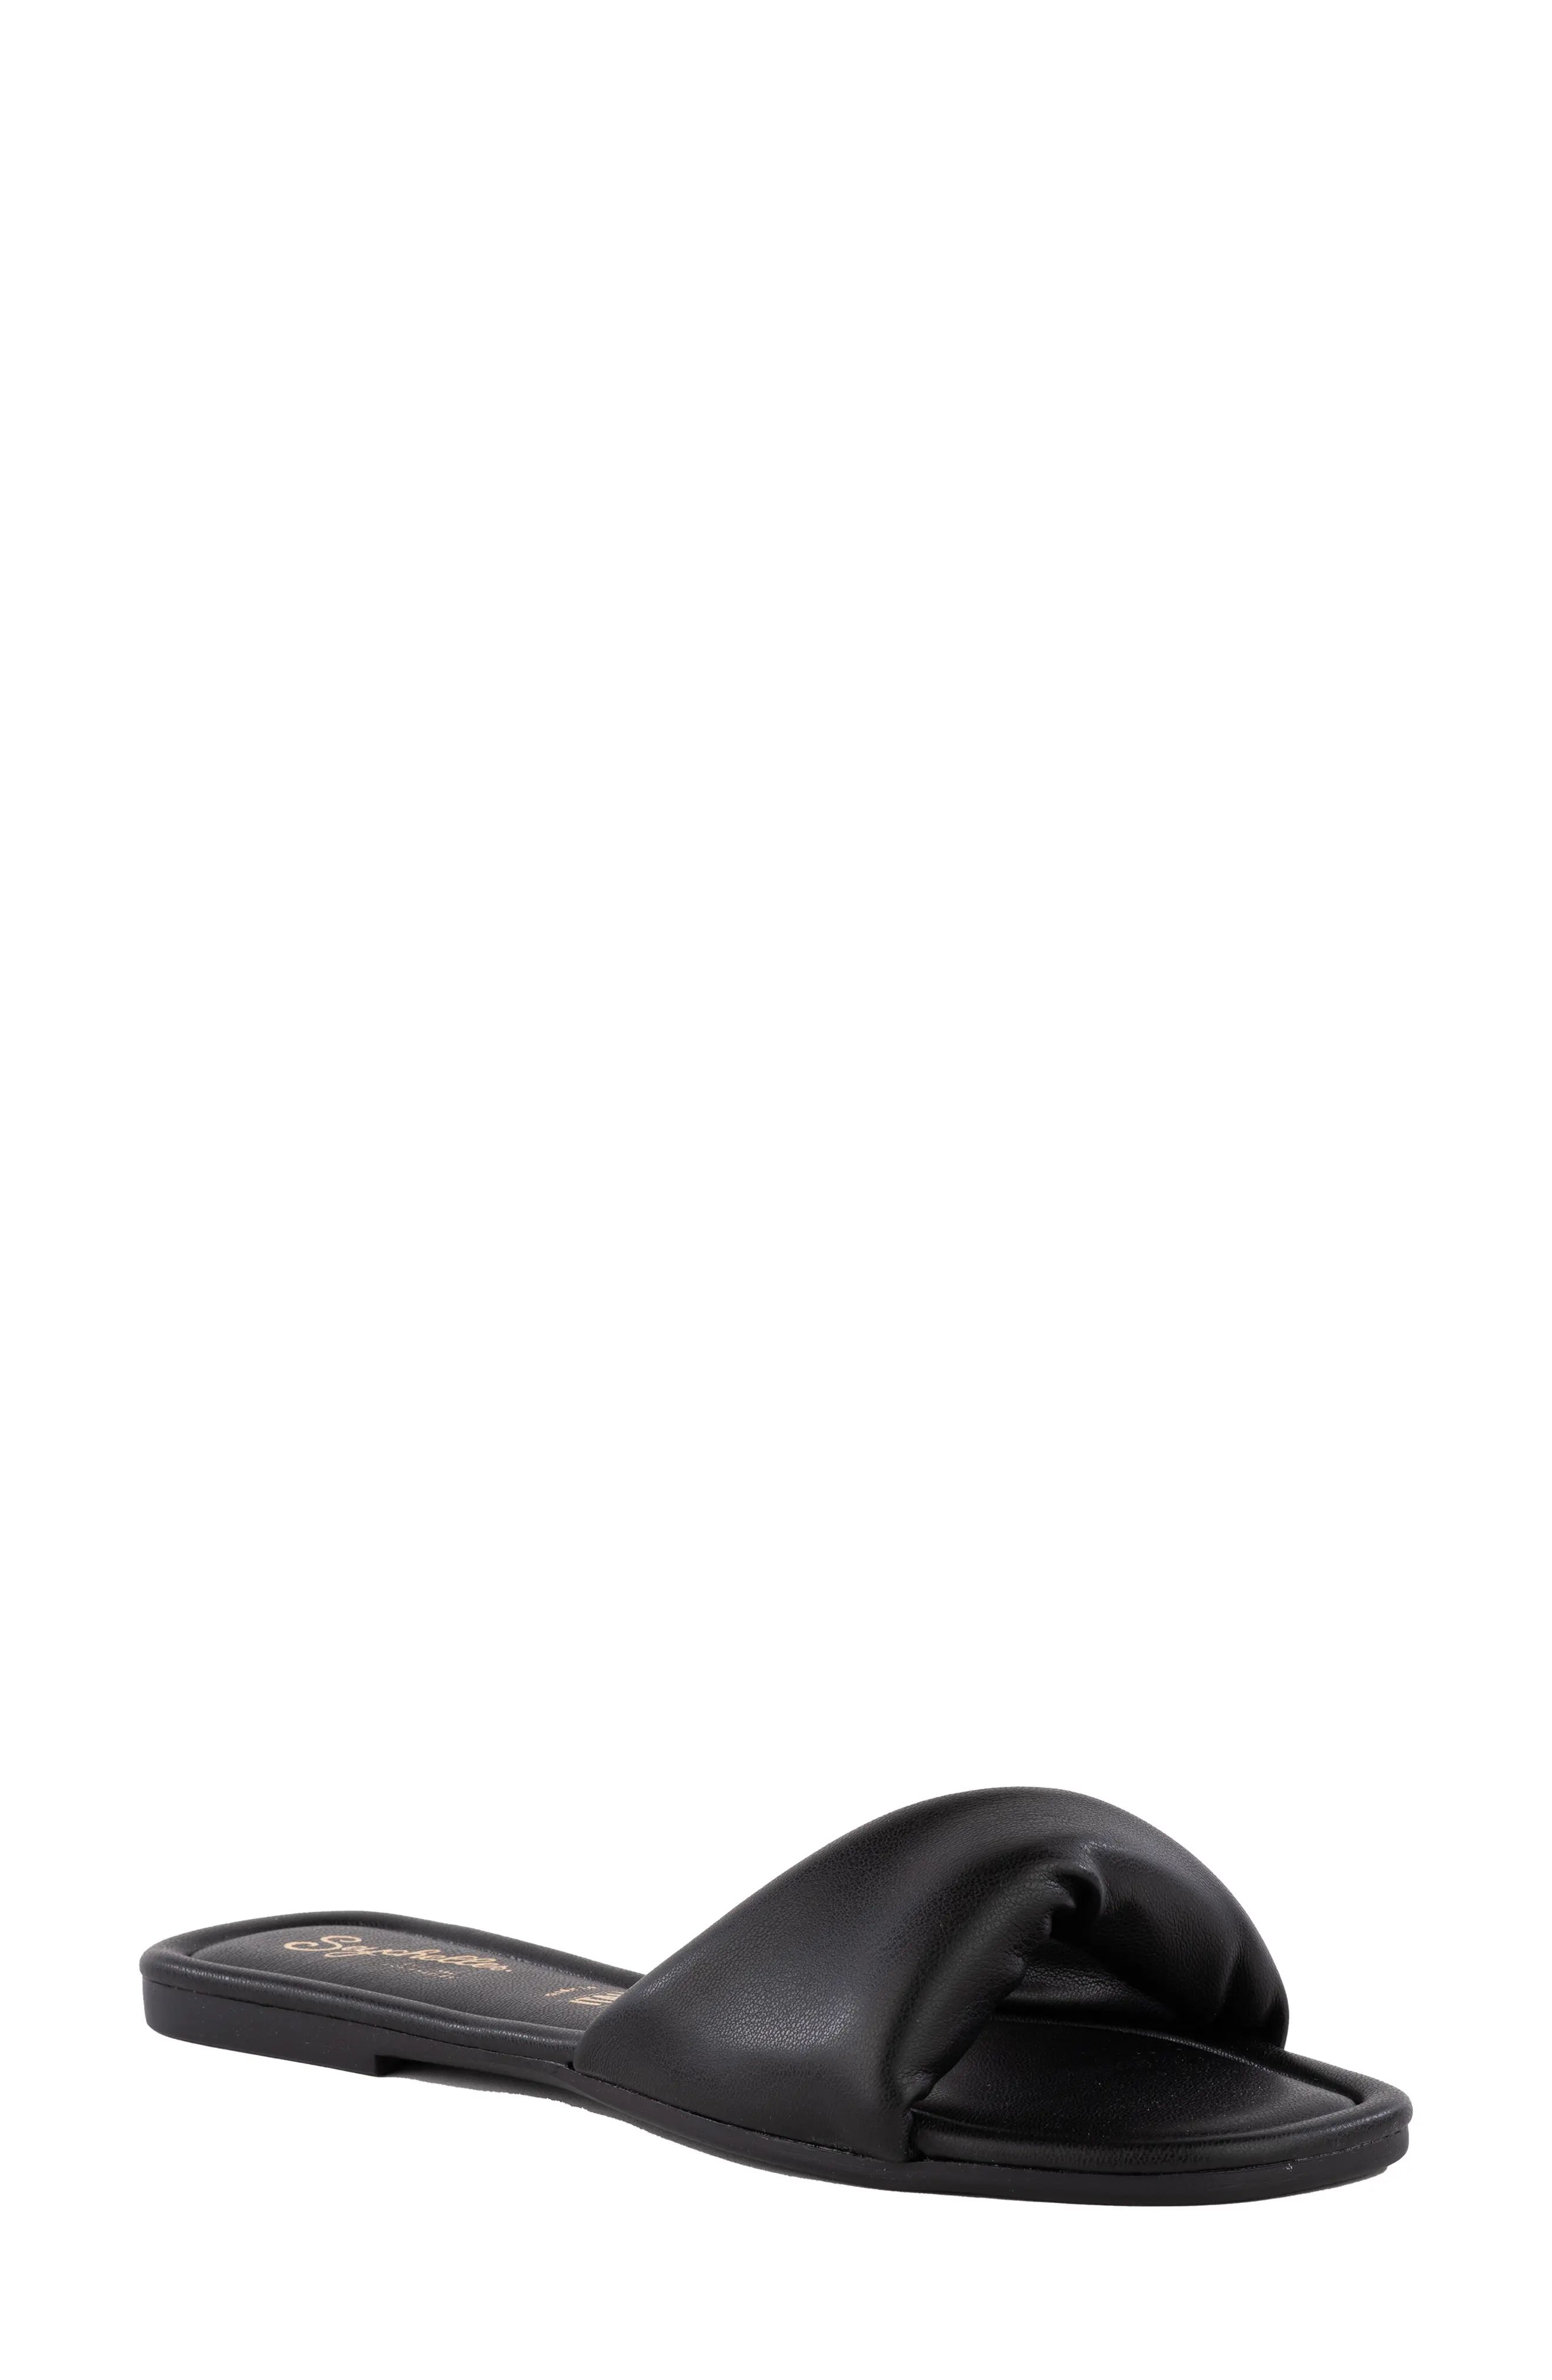 Seychelles Breath of Fresh Air Slide Sandal in Black V-Leather at Nordstrom, Size 10 | Nordstrom